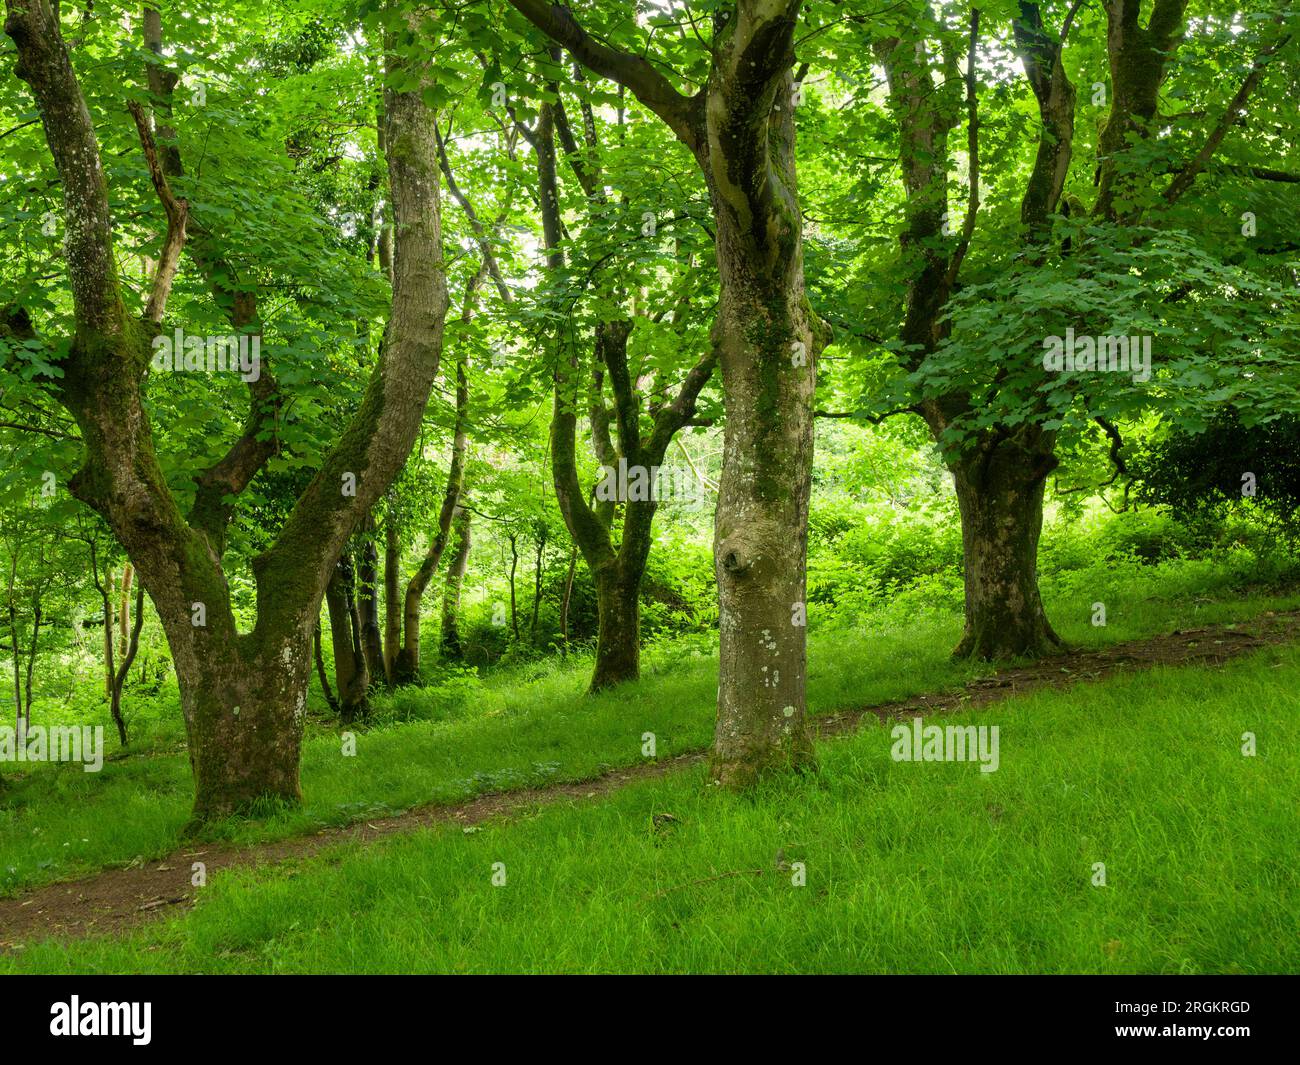 King’s Wood, the ancient broadleaf woodland in the Mendip Hills near Axbridge, Somerset, England. Stock Photo